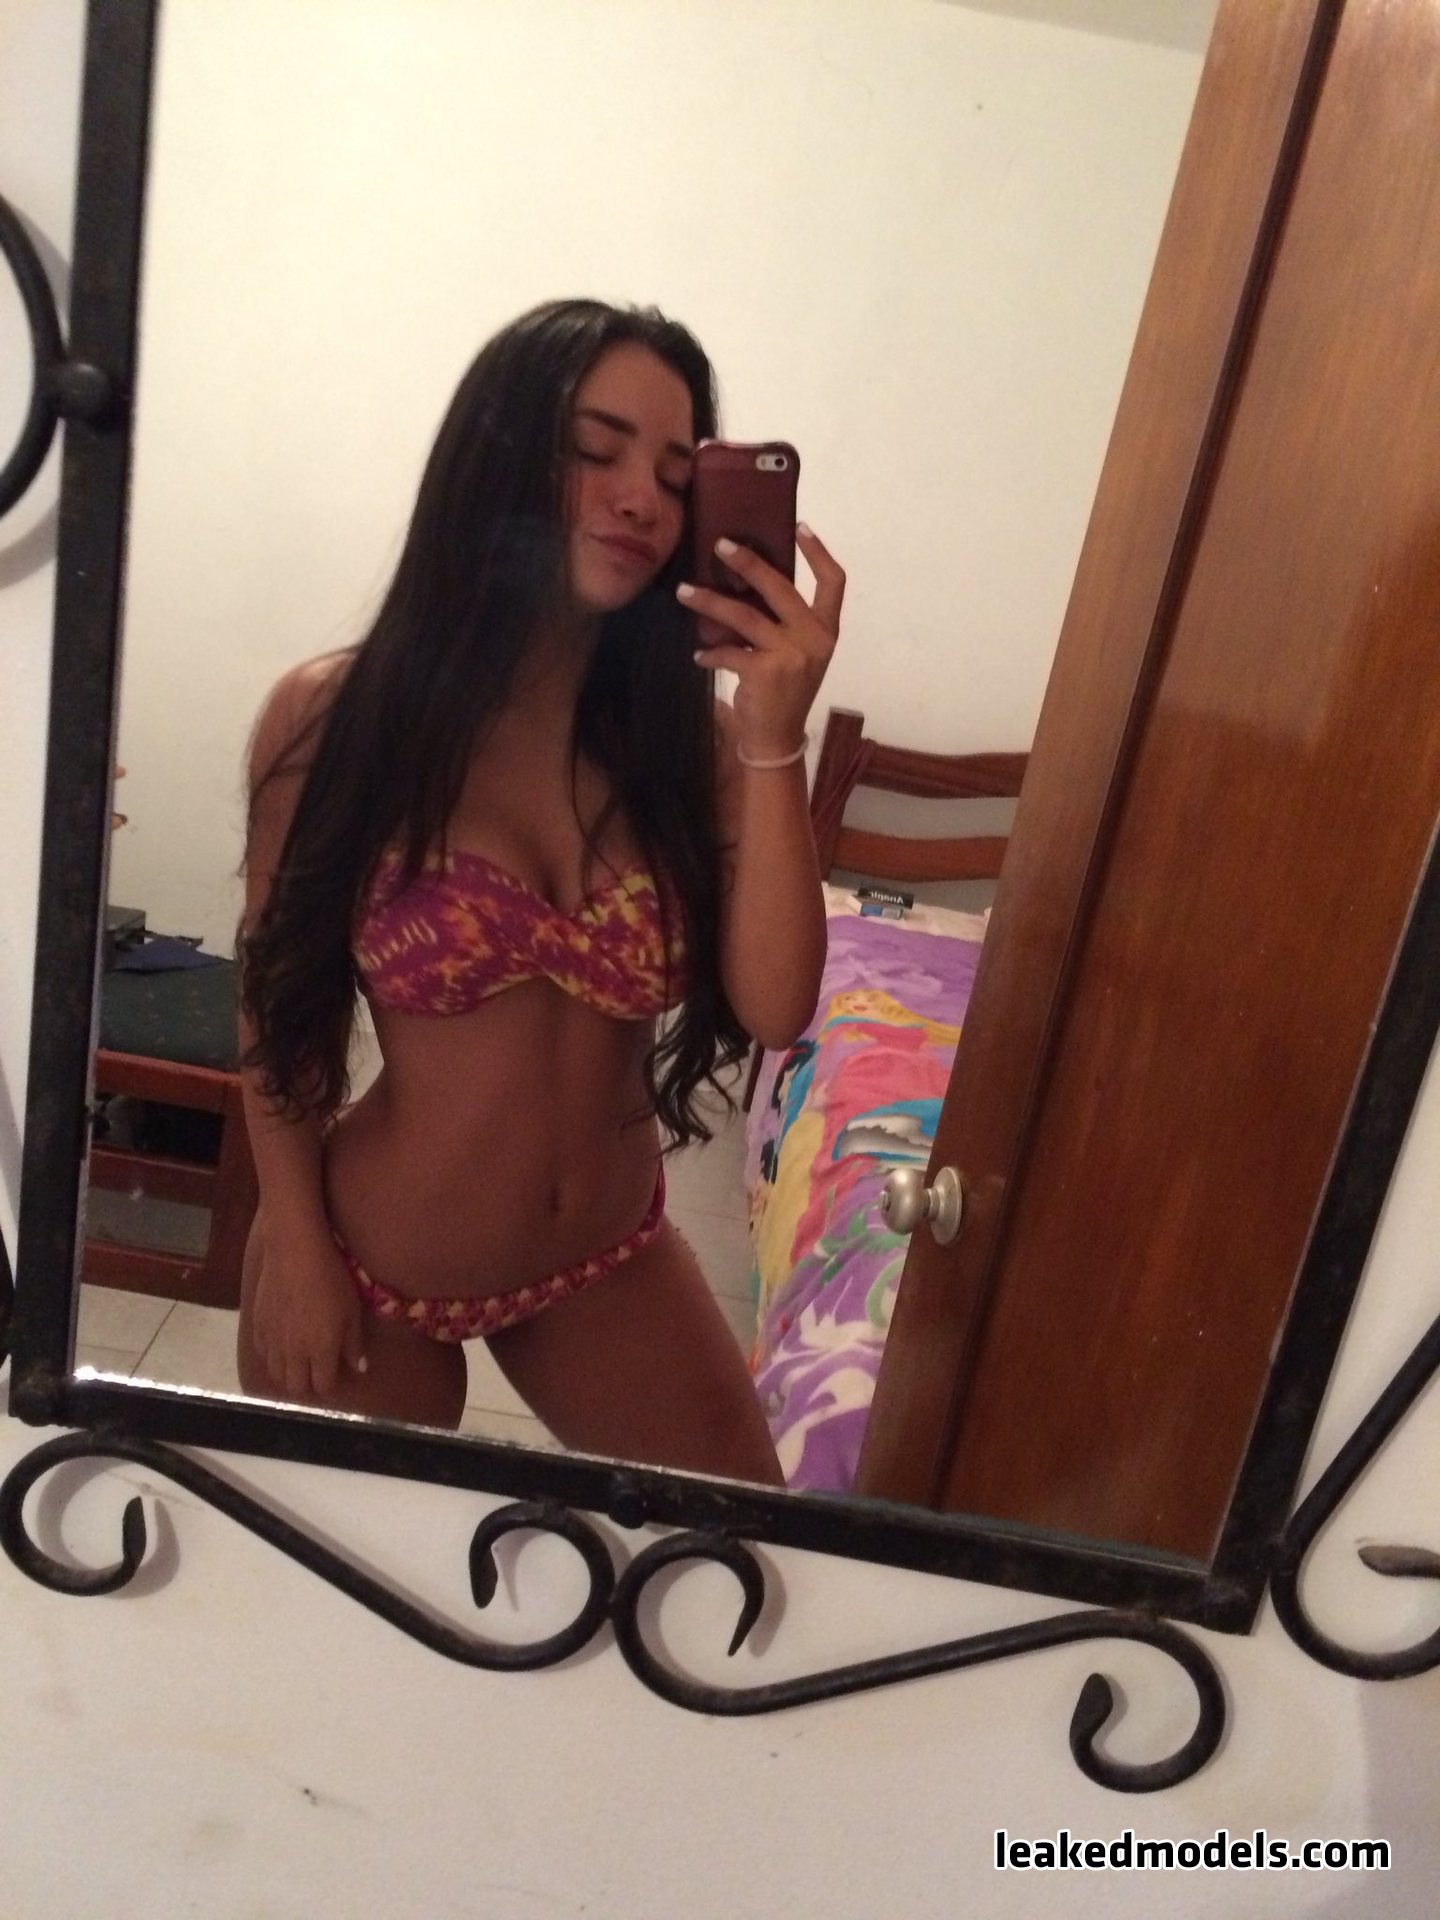 katy gomita leaked nude leakedmodels.com 0017 - Katherine Alejandra Martínez – Katy Gomita OnlyFans Sexy Leaks (30 Photos)